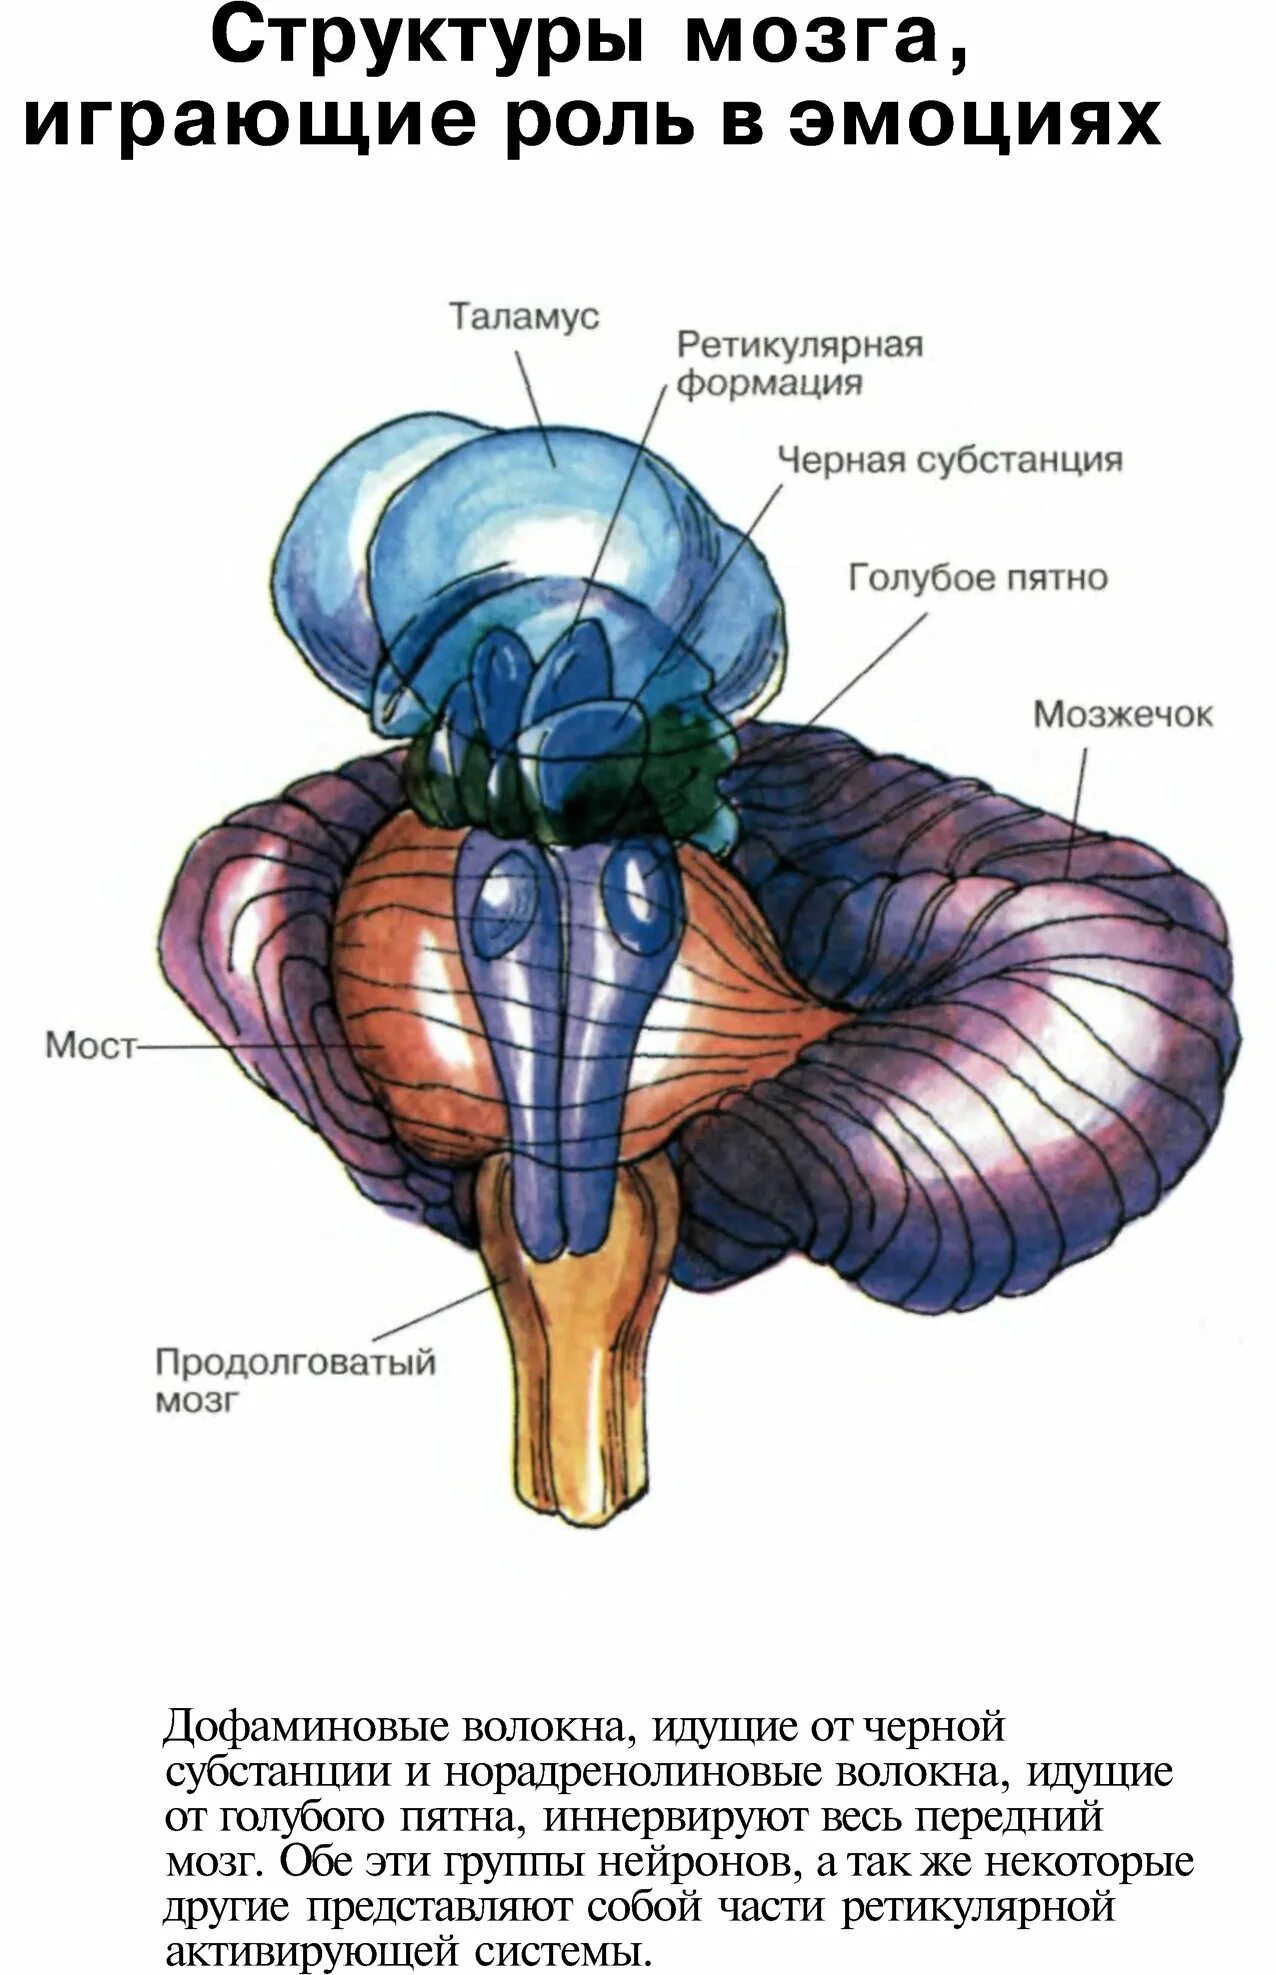 Голубое пятно ретикулярной формации. Голубое пятно ретикулярной формации ствола мозга. Ядра шва ретикулярная формация. Таламус (Thalamus, зрительный бугор).